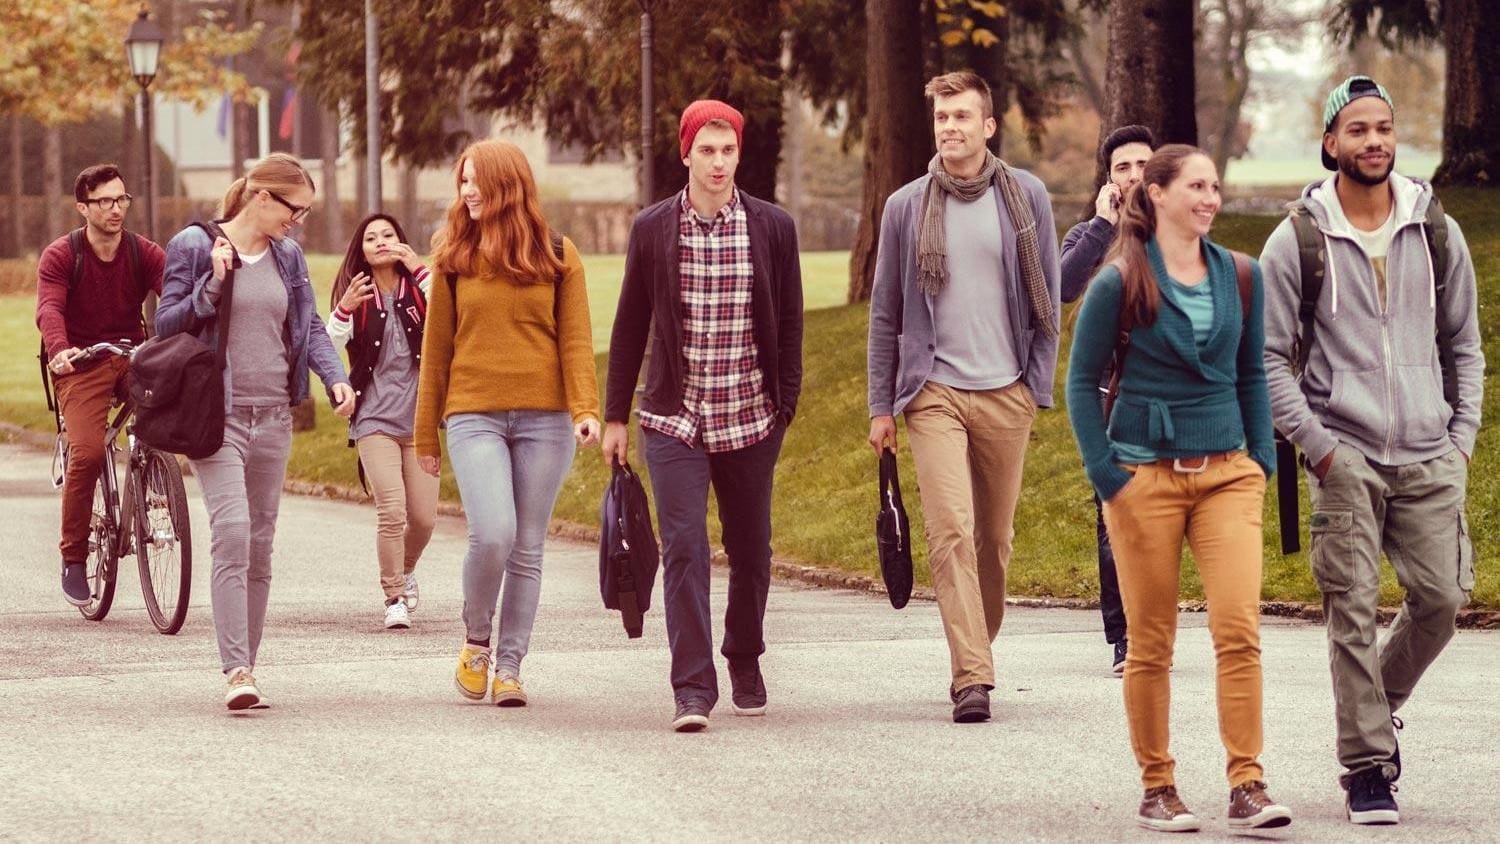 Students Walking on University Campus